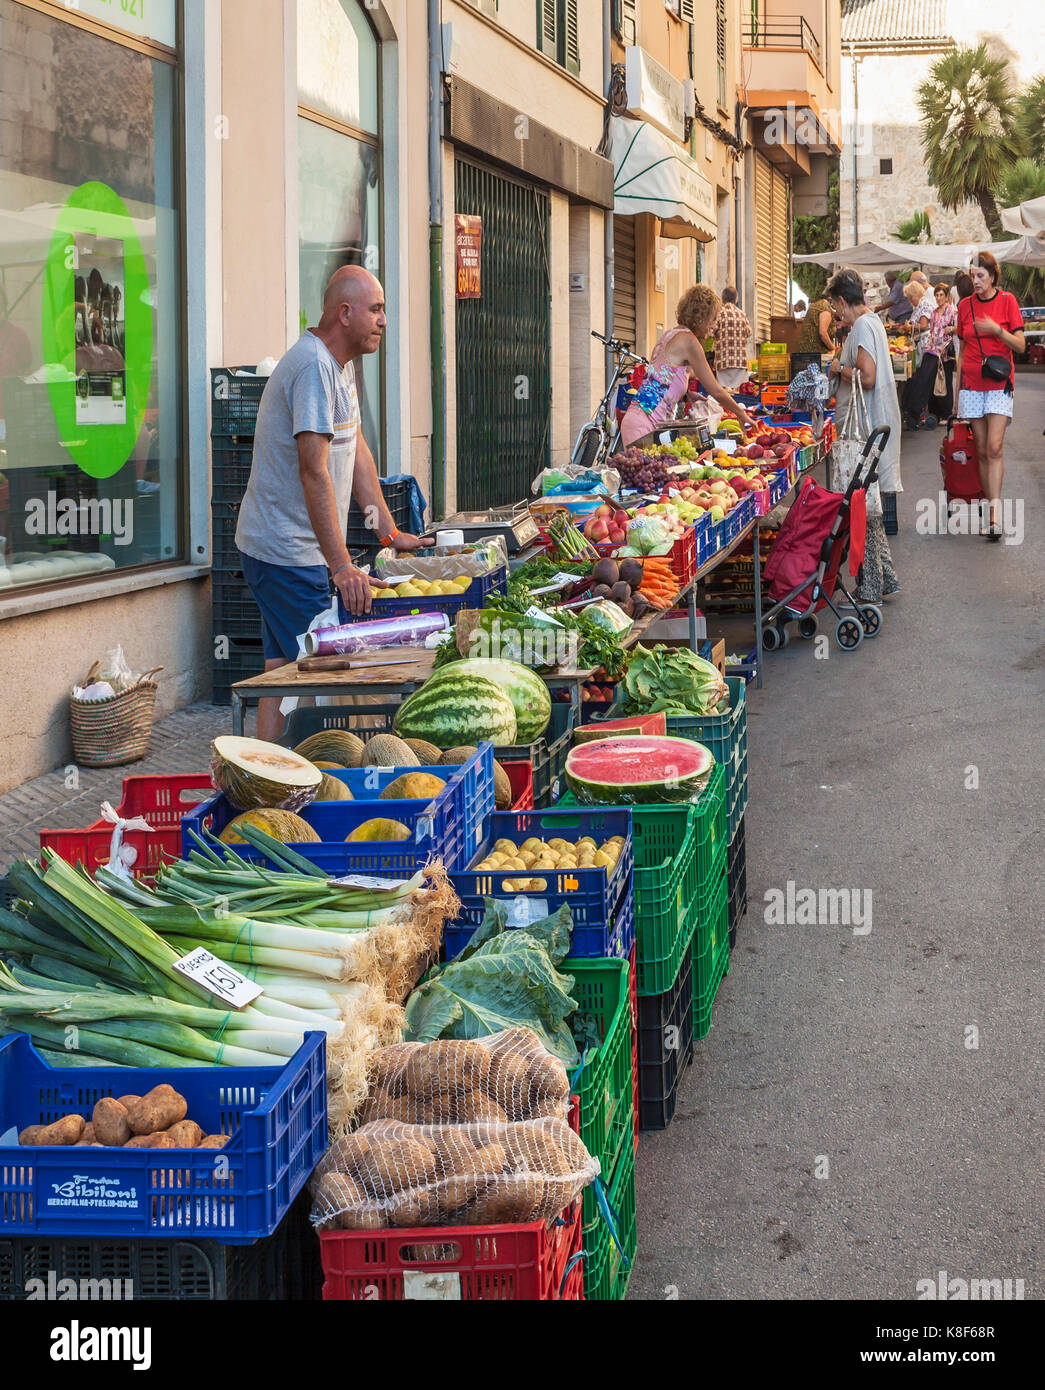 Spanish fruit and veg market stall. Stock Photo